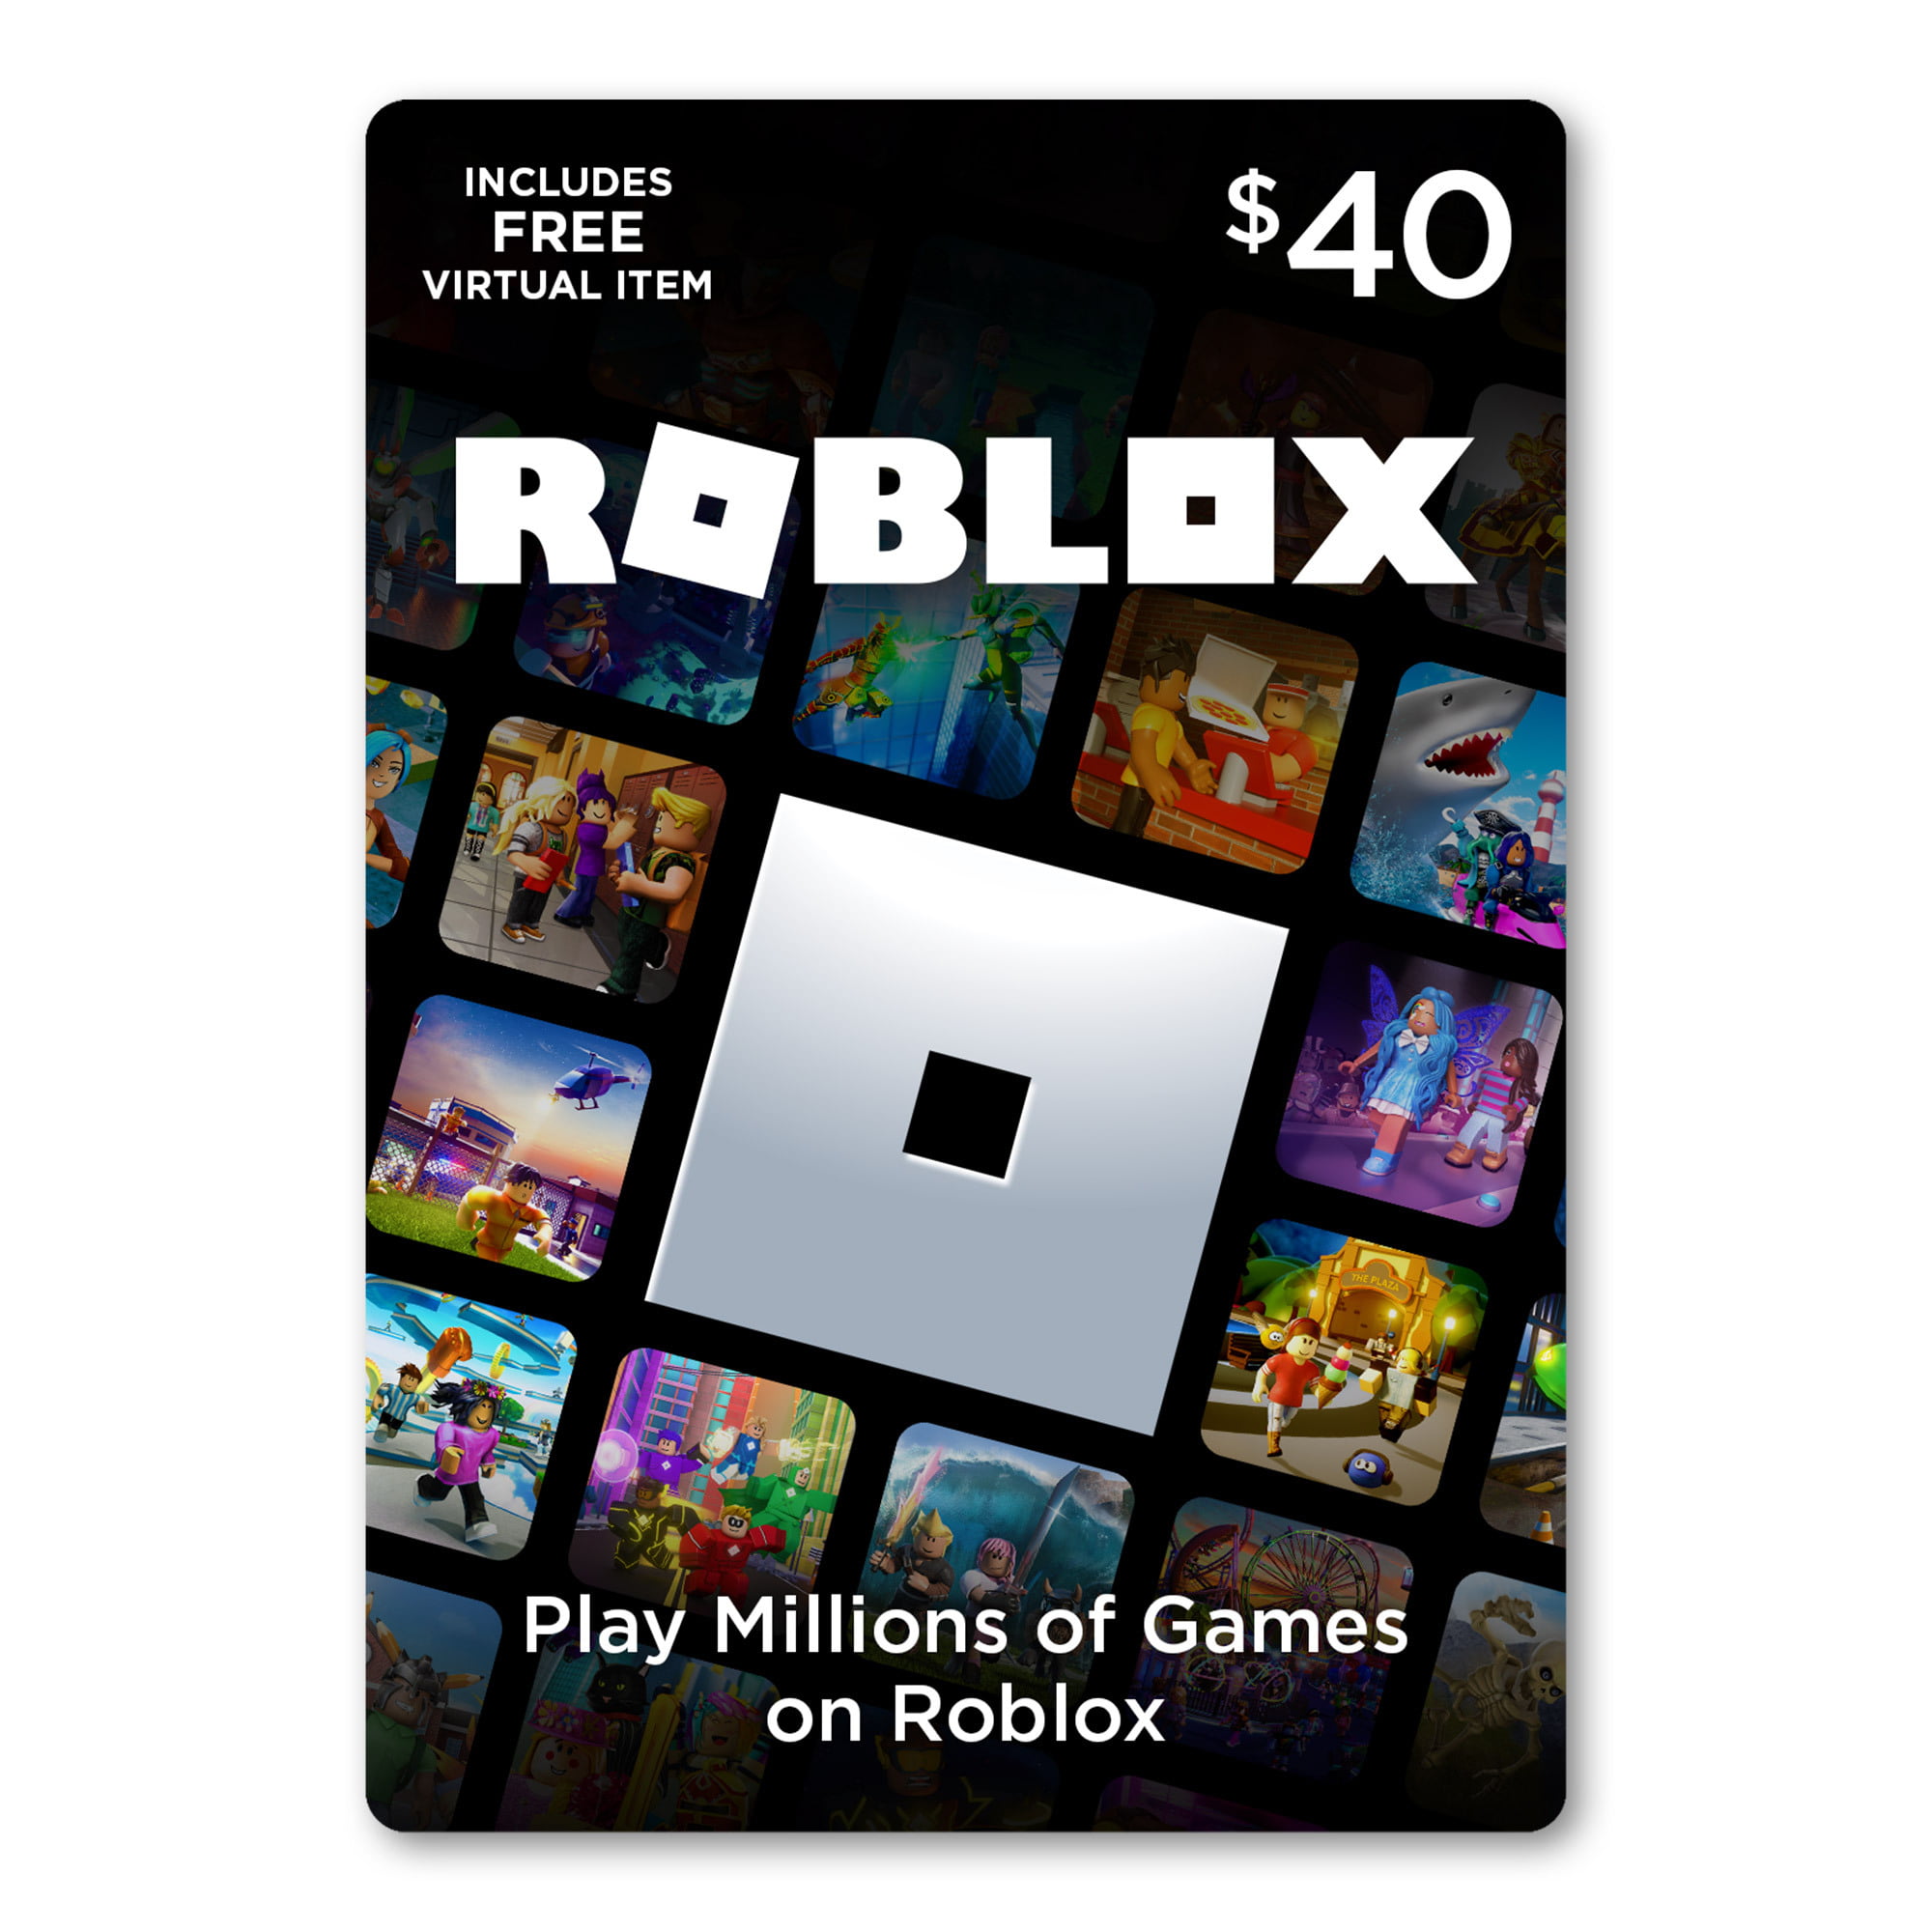 Roblox 40 Digital Gift Card Includes Exclusive Virtual Item Digital Download Walmart Com Walmart Com - 40 dollar roblox gift card